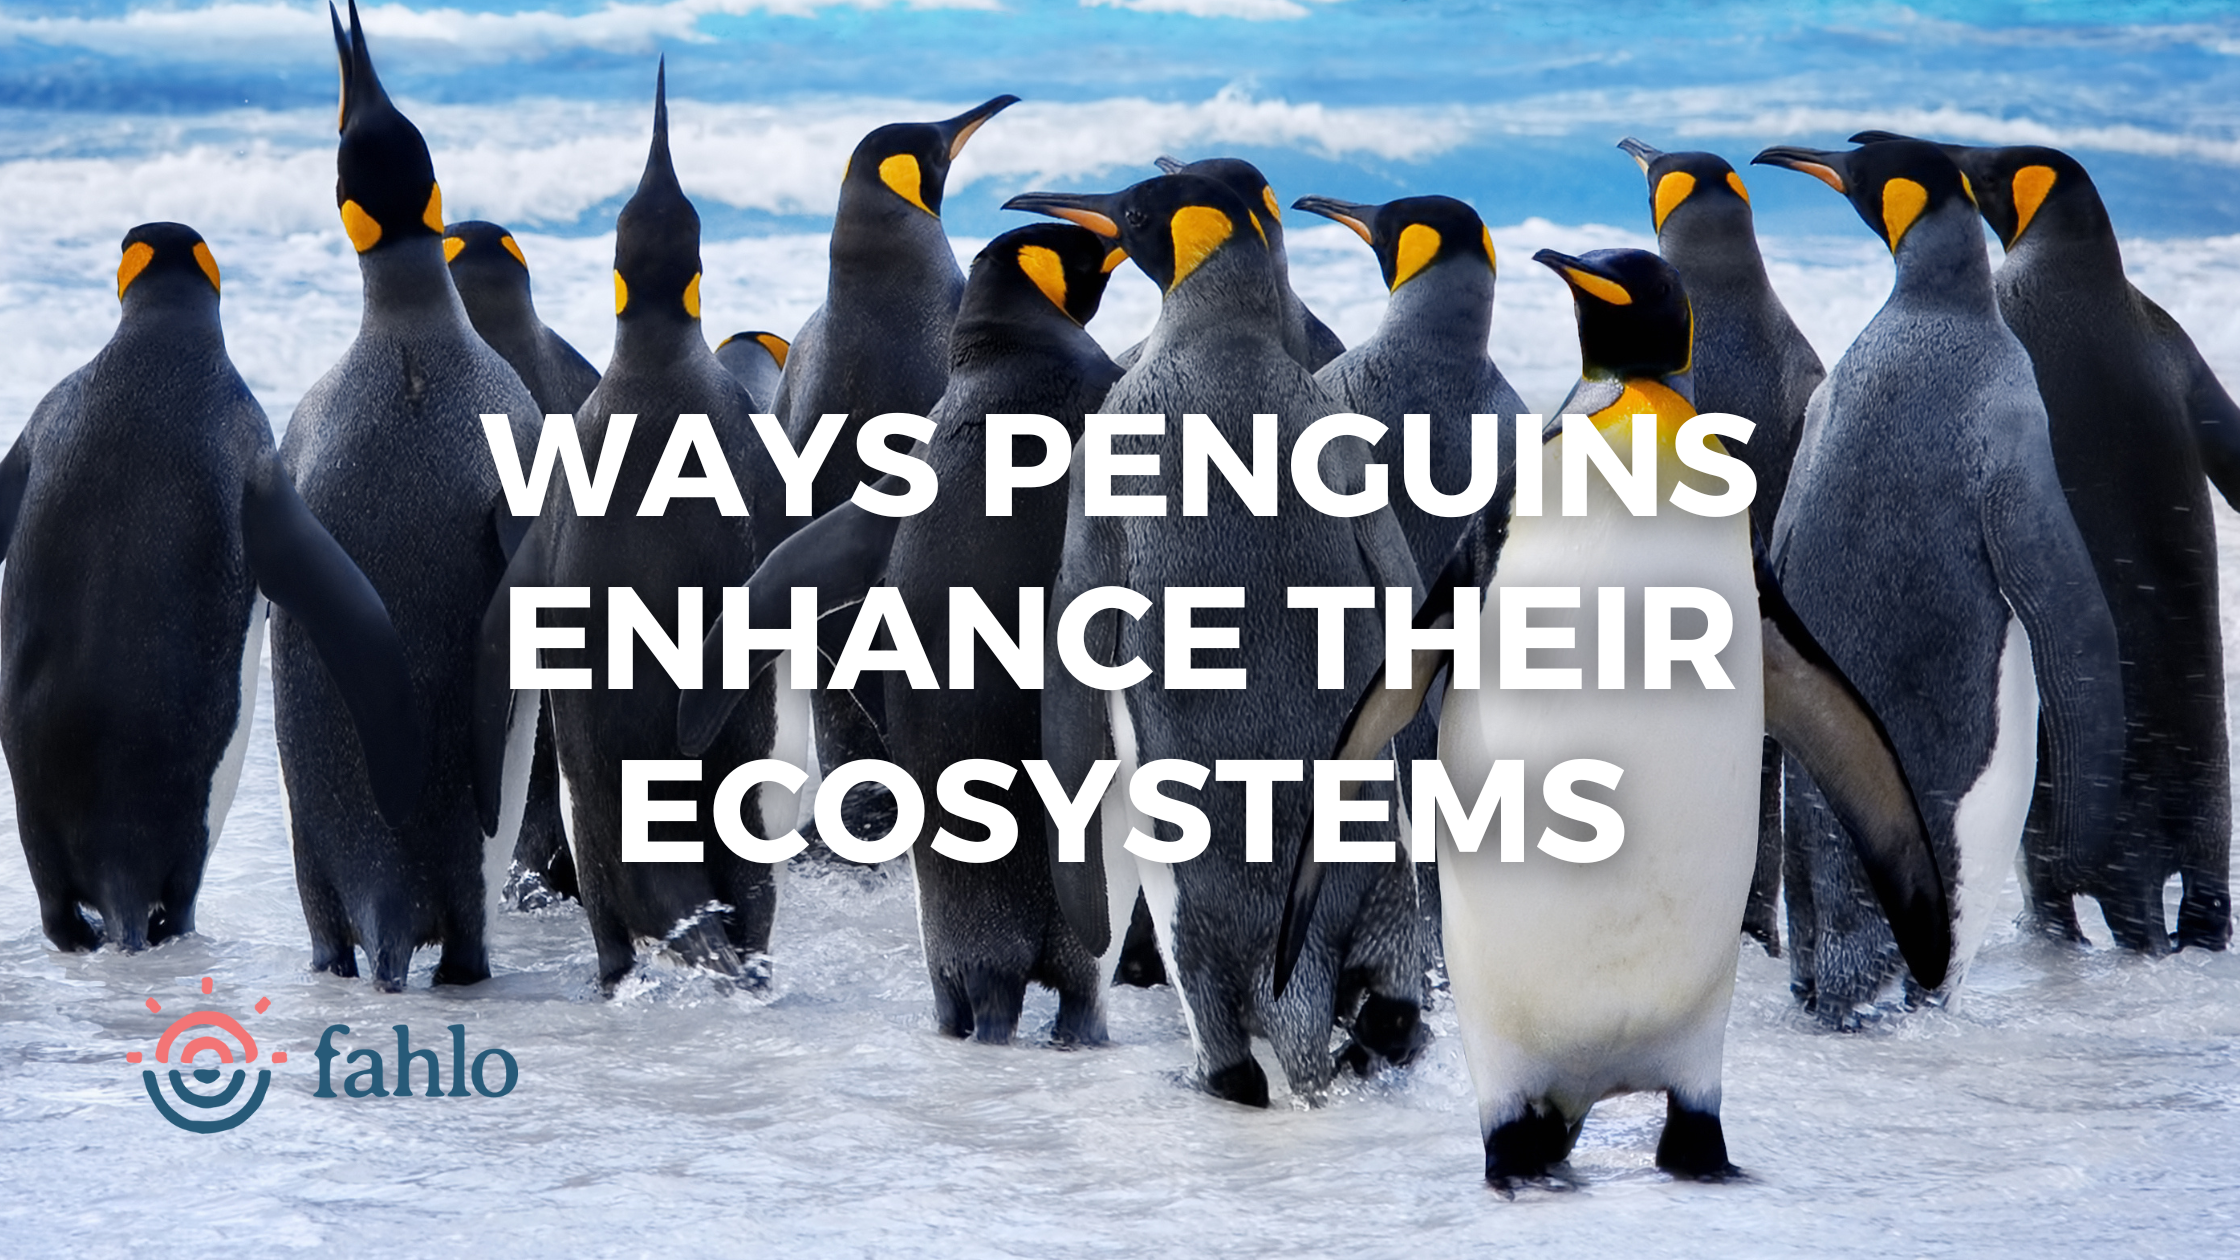 Ways Penguins Enhance Their Ecosystems